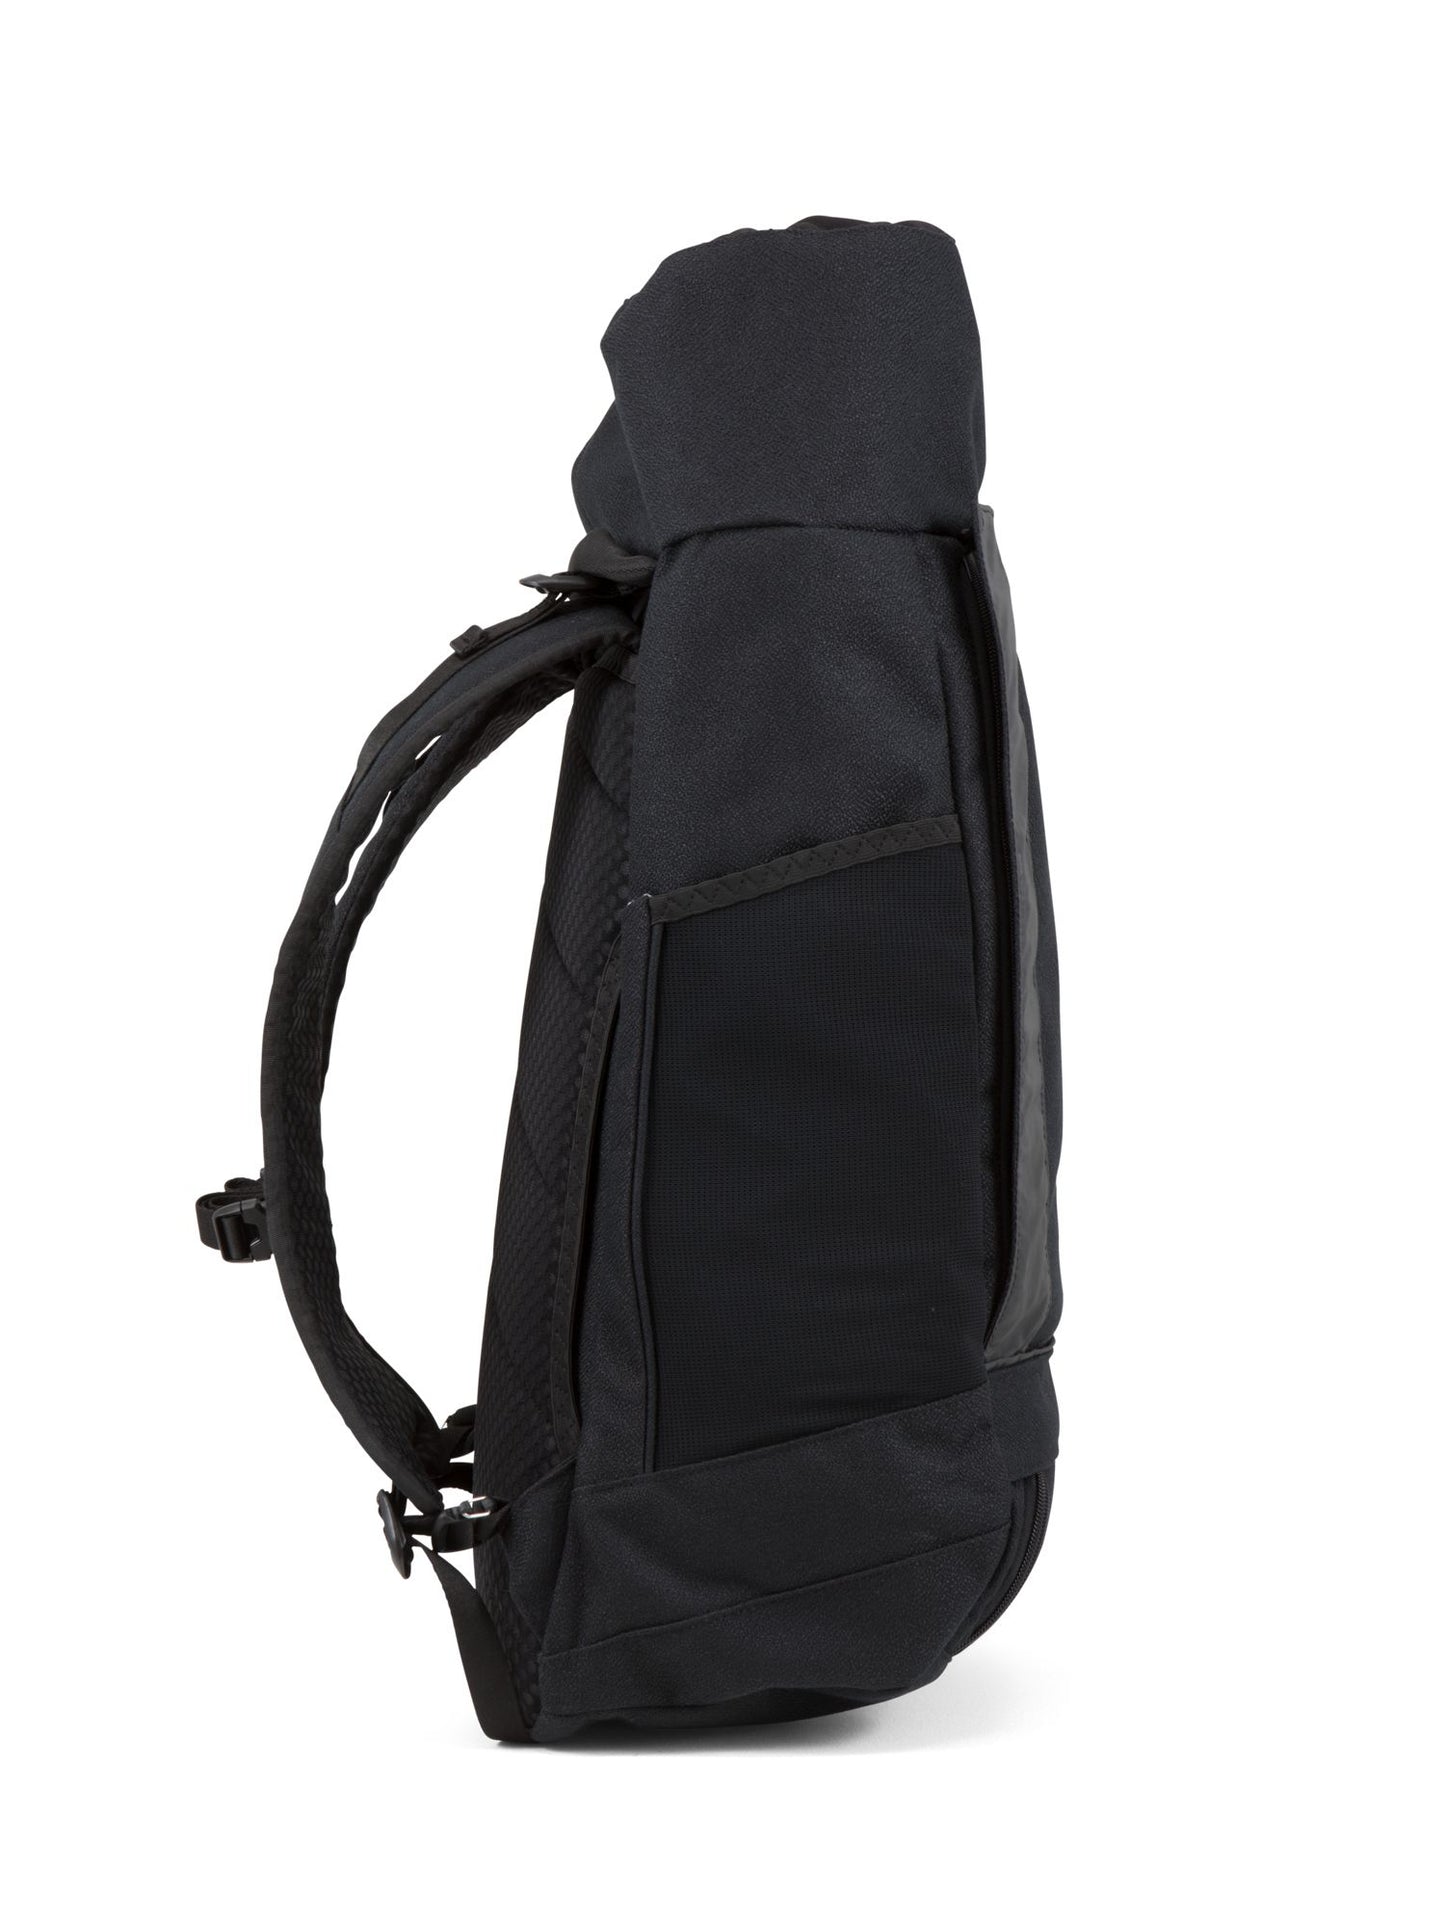 pinqponq-backpack-Blok-Large-Licorice-Black-side